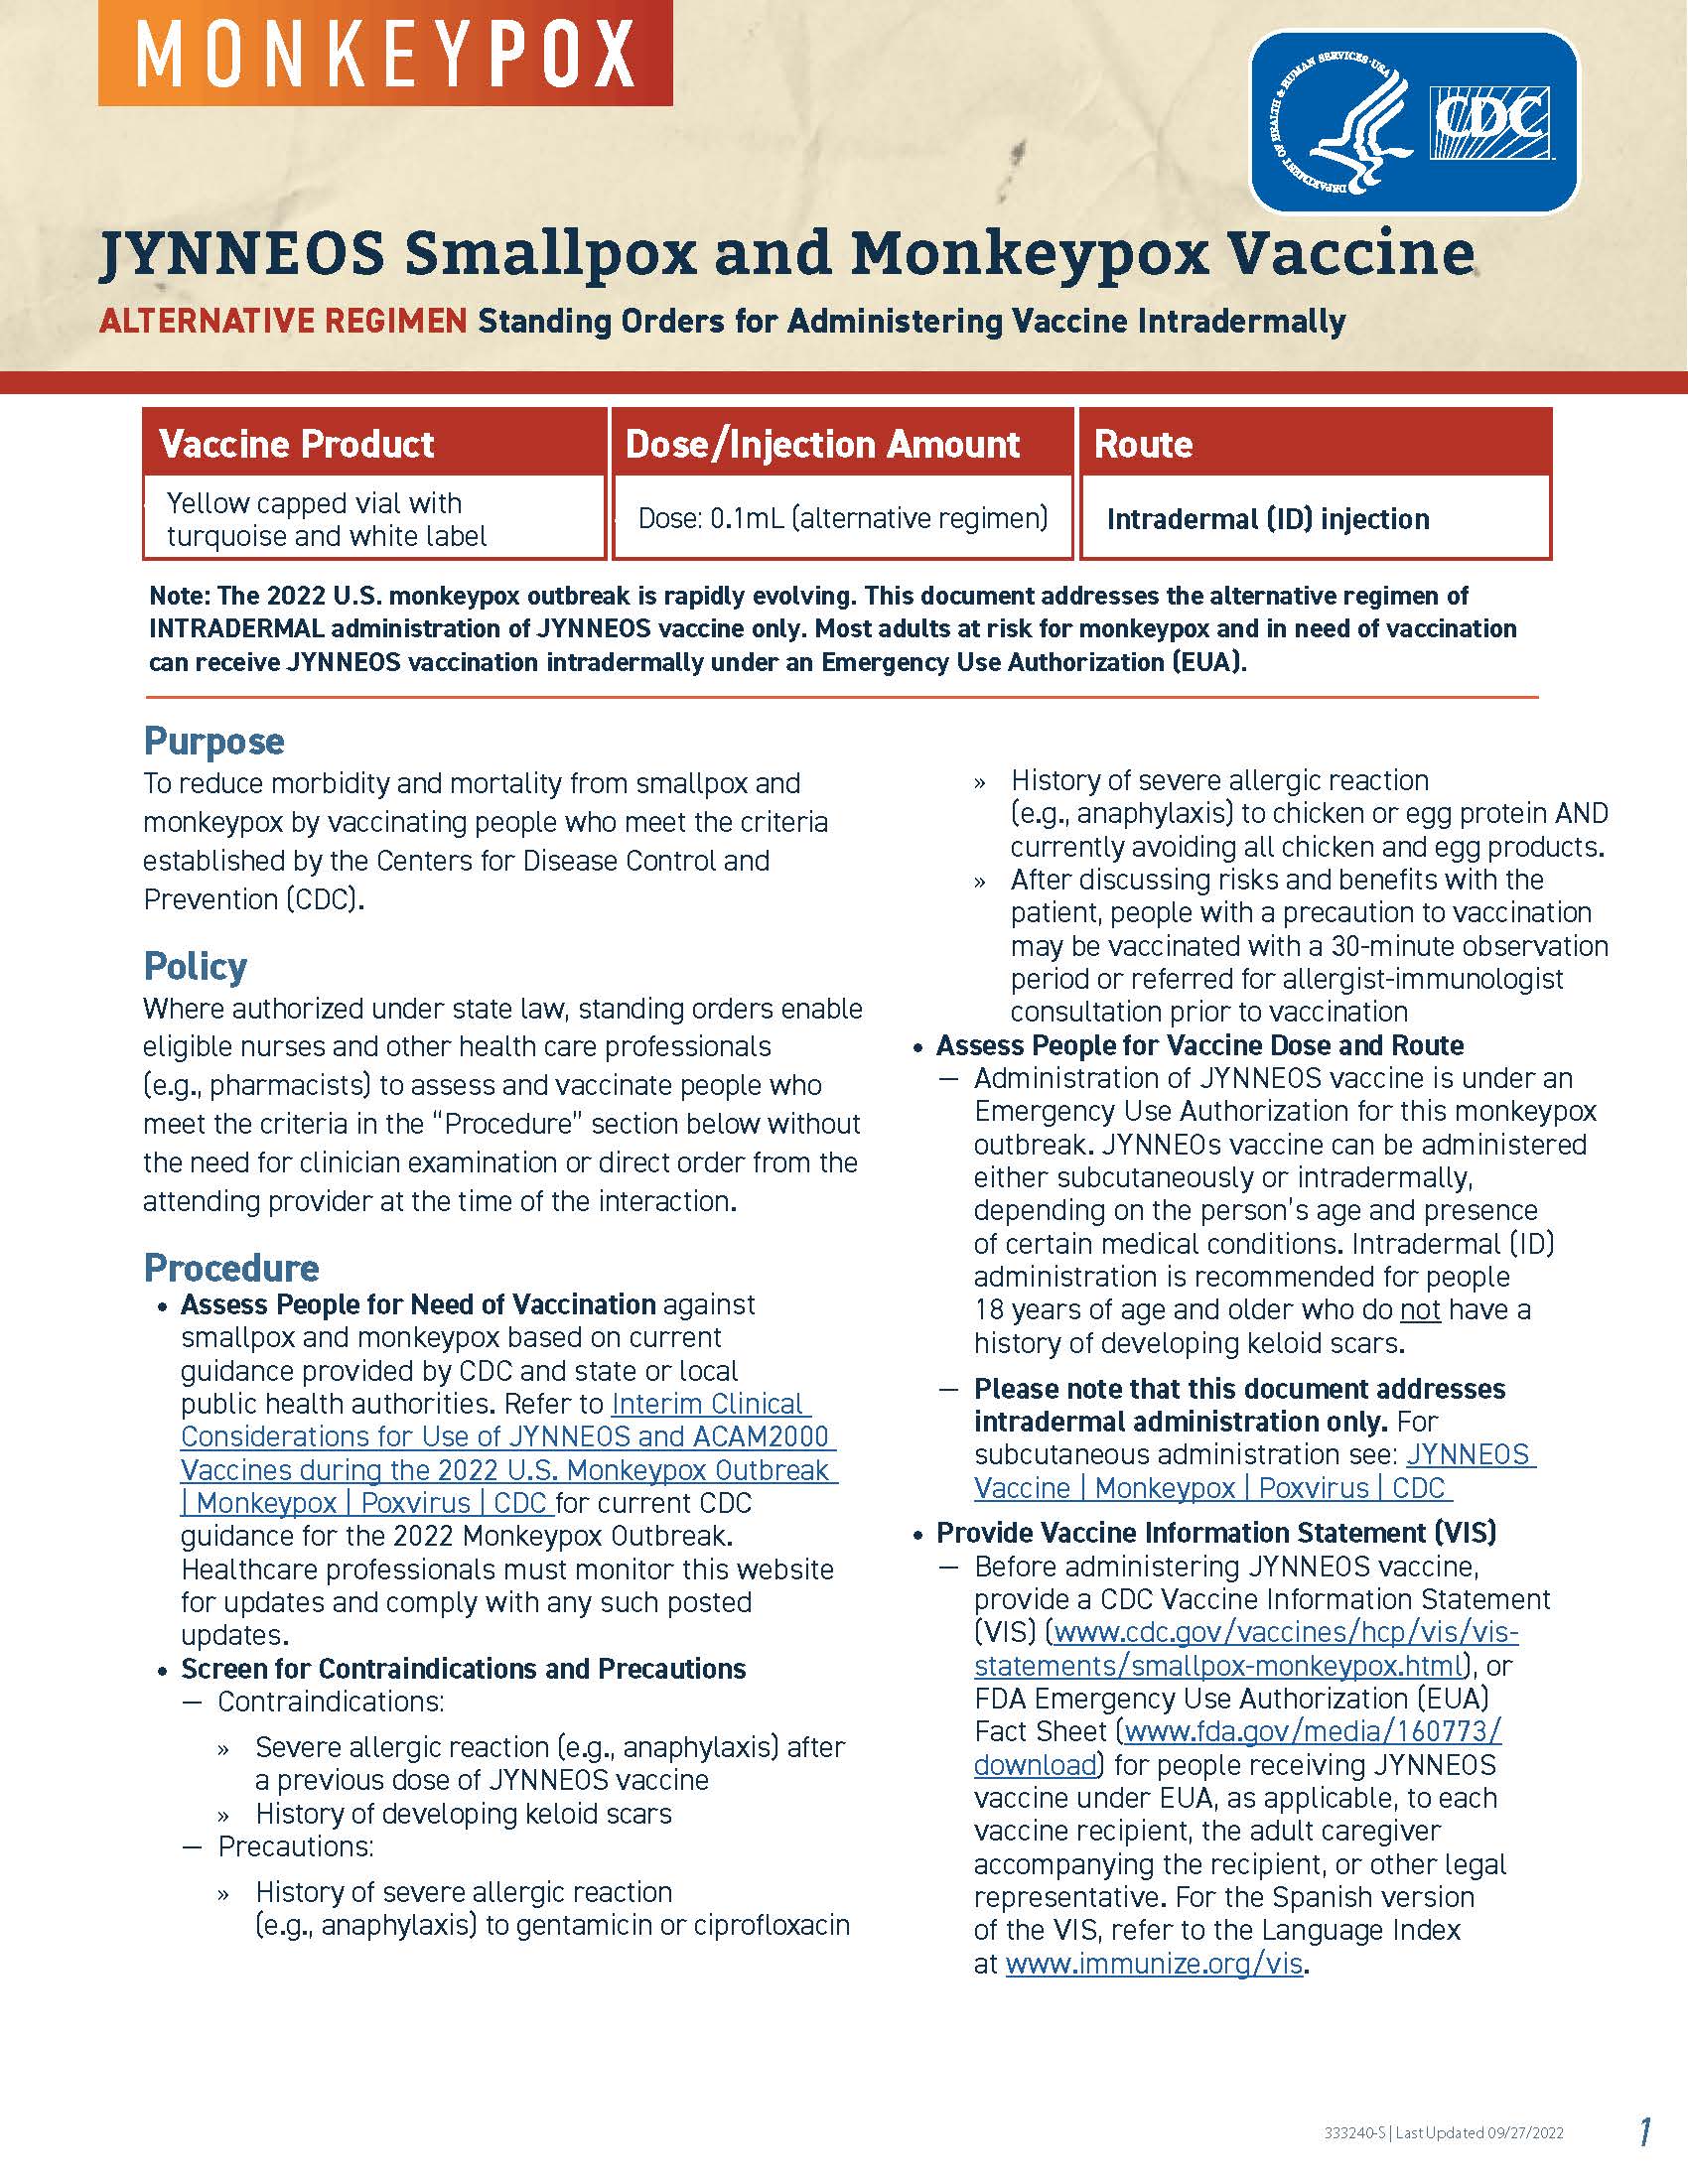 JYNNEOS Standing Orders (Alternative Regimen), PDF thumbnail